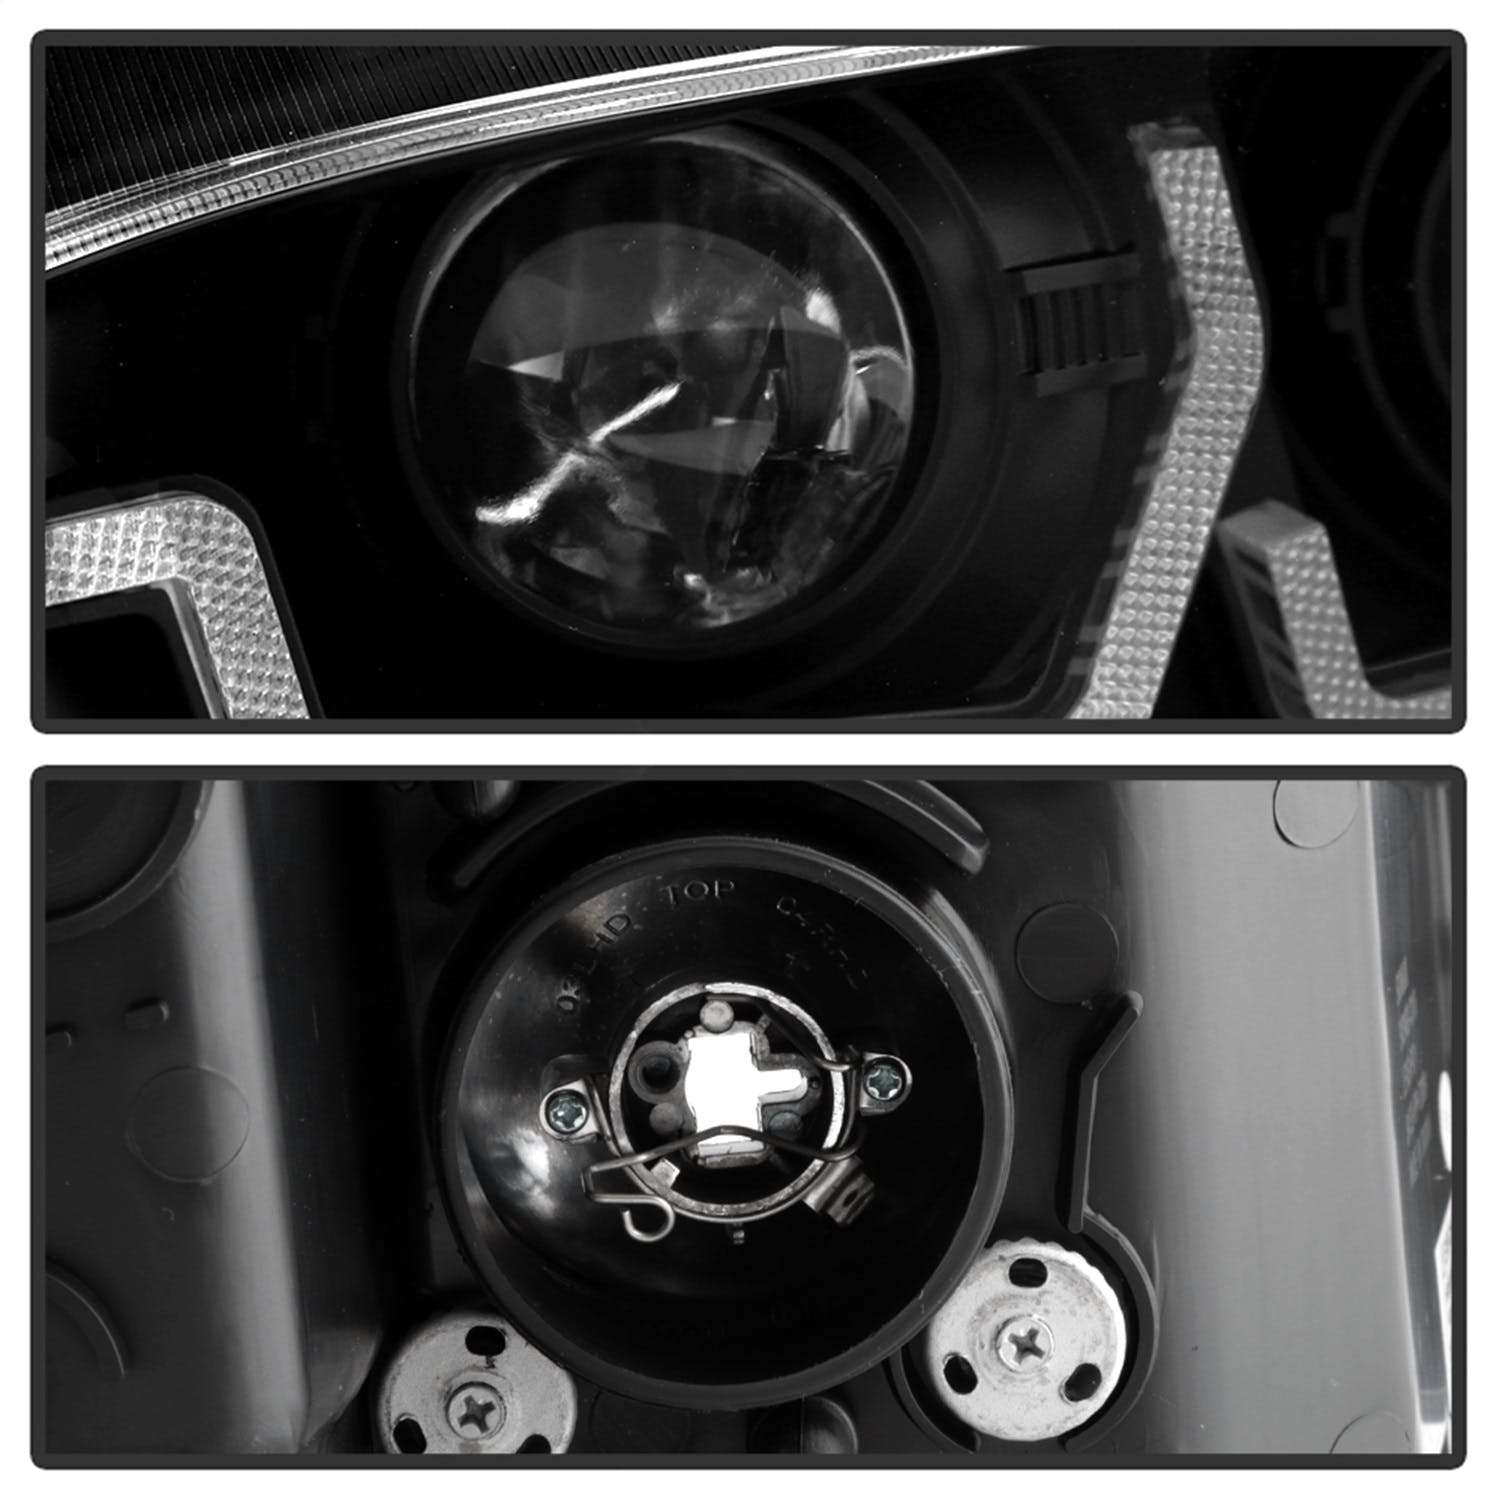 Spyder Auto 5087867 Projector Headlights